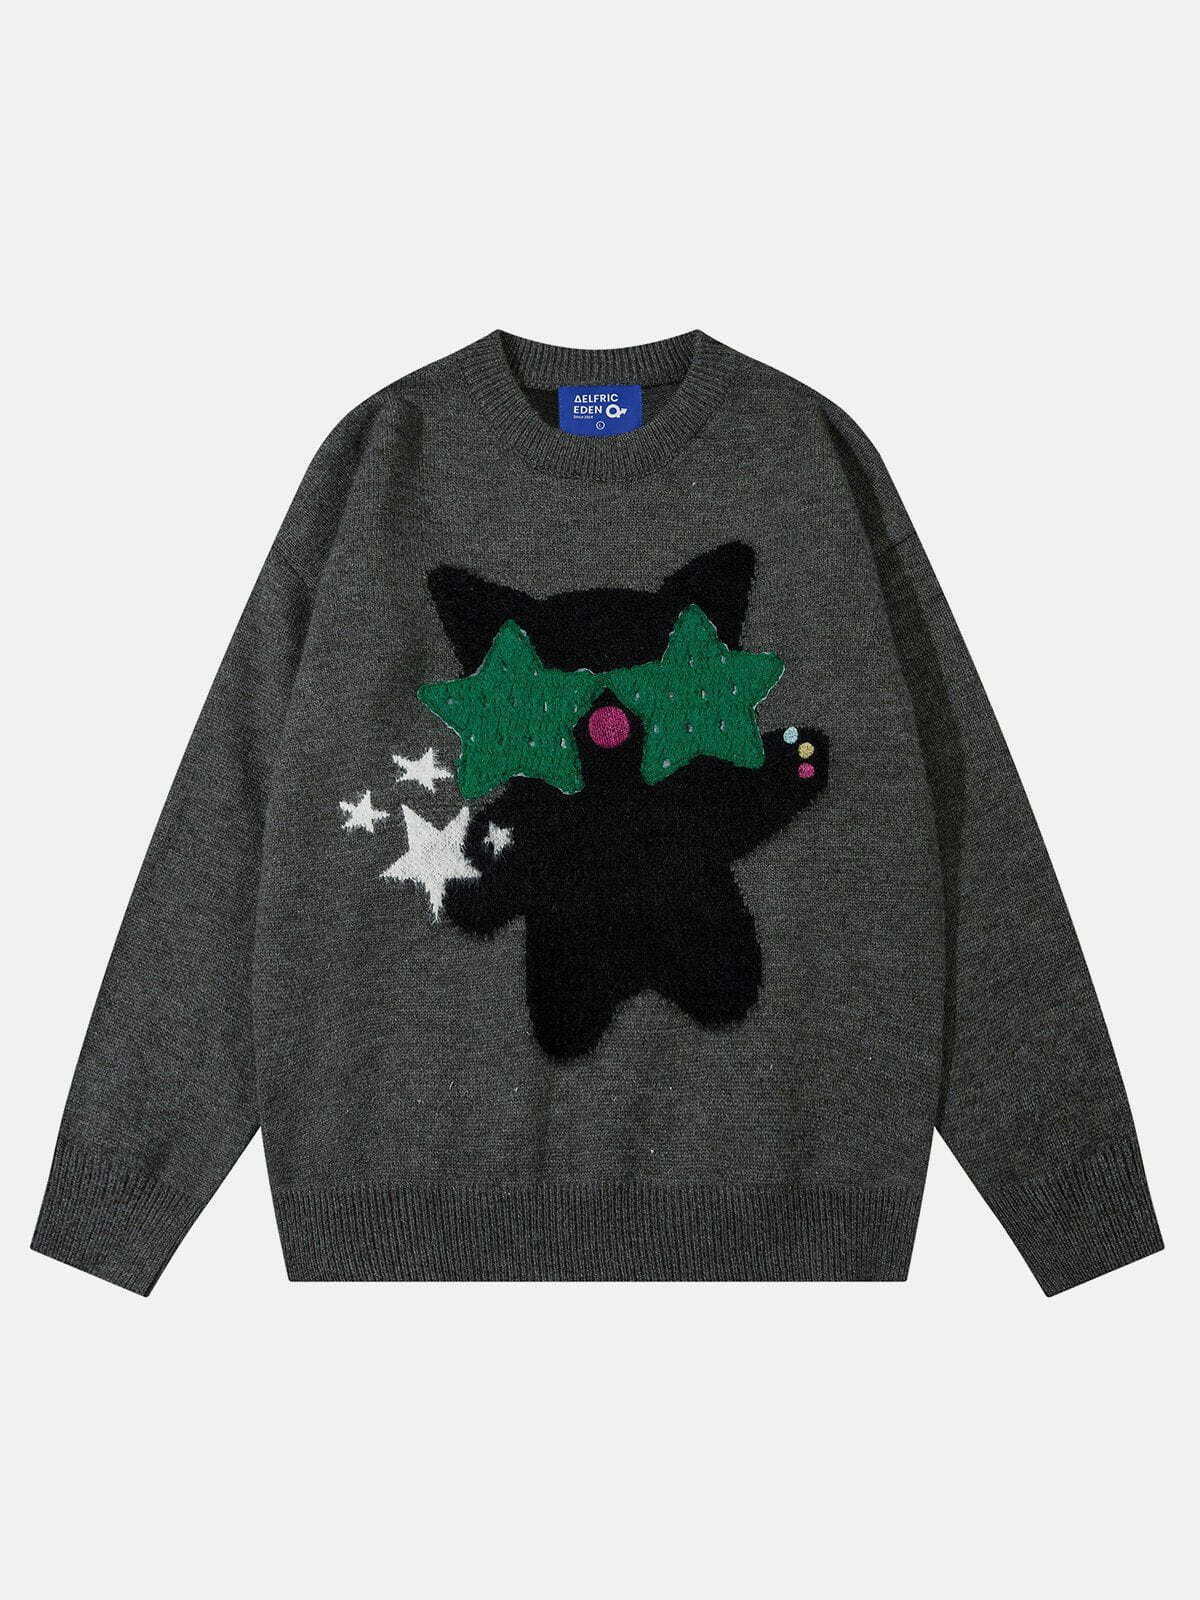 chic cat jacquard sweater   youthful & trendy design 2983